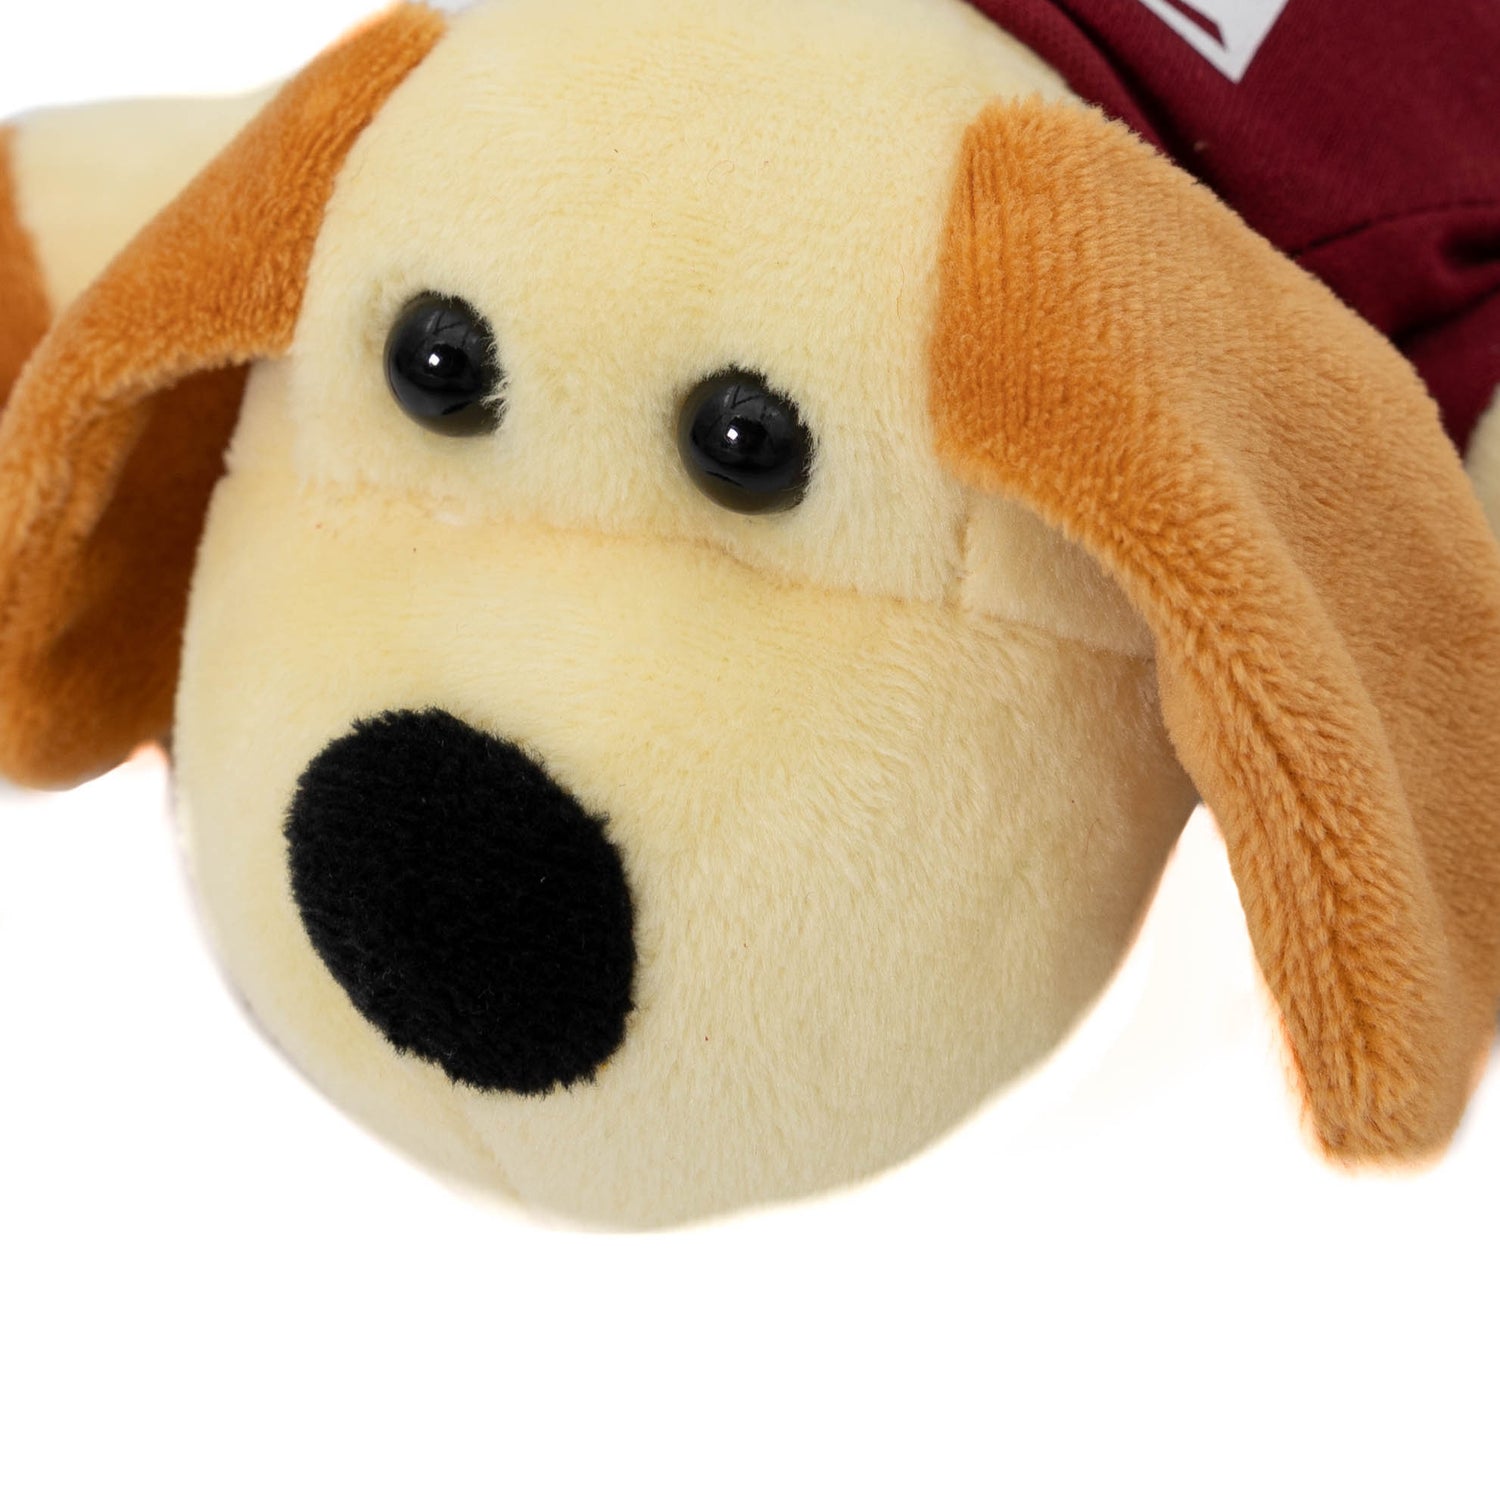 Texas A&M Beveled Atm Floppy Dog Stuffed Animal